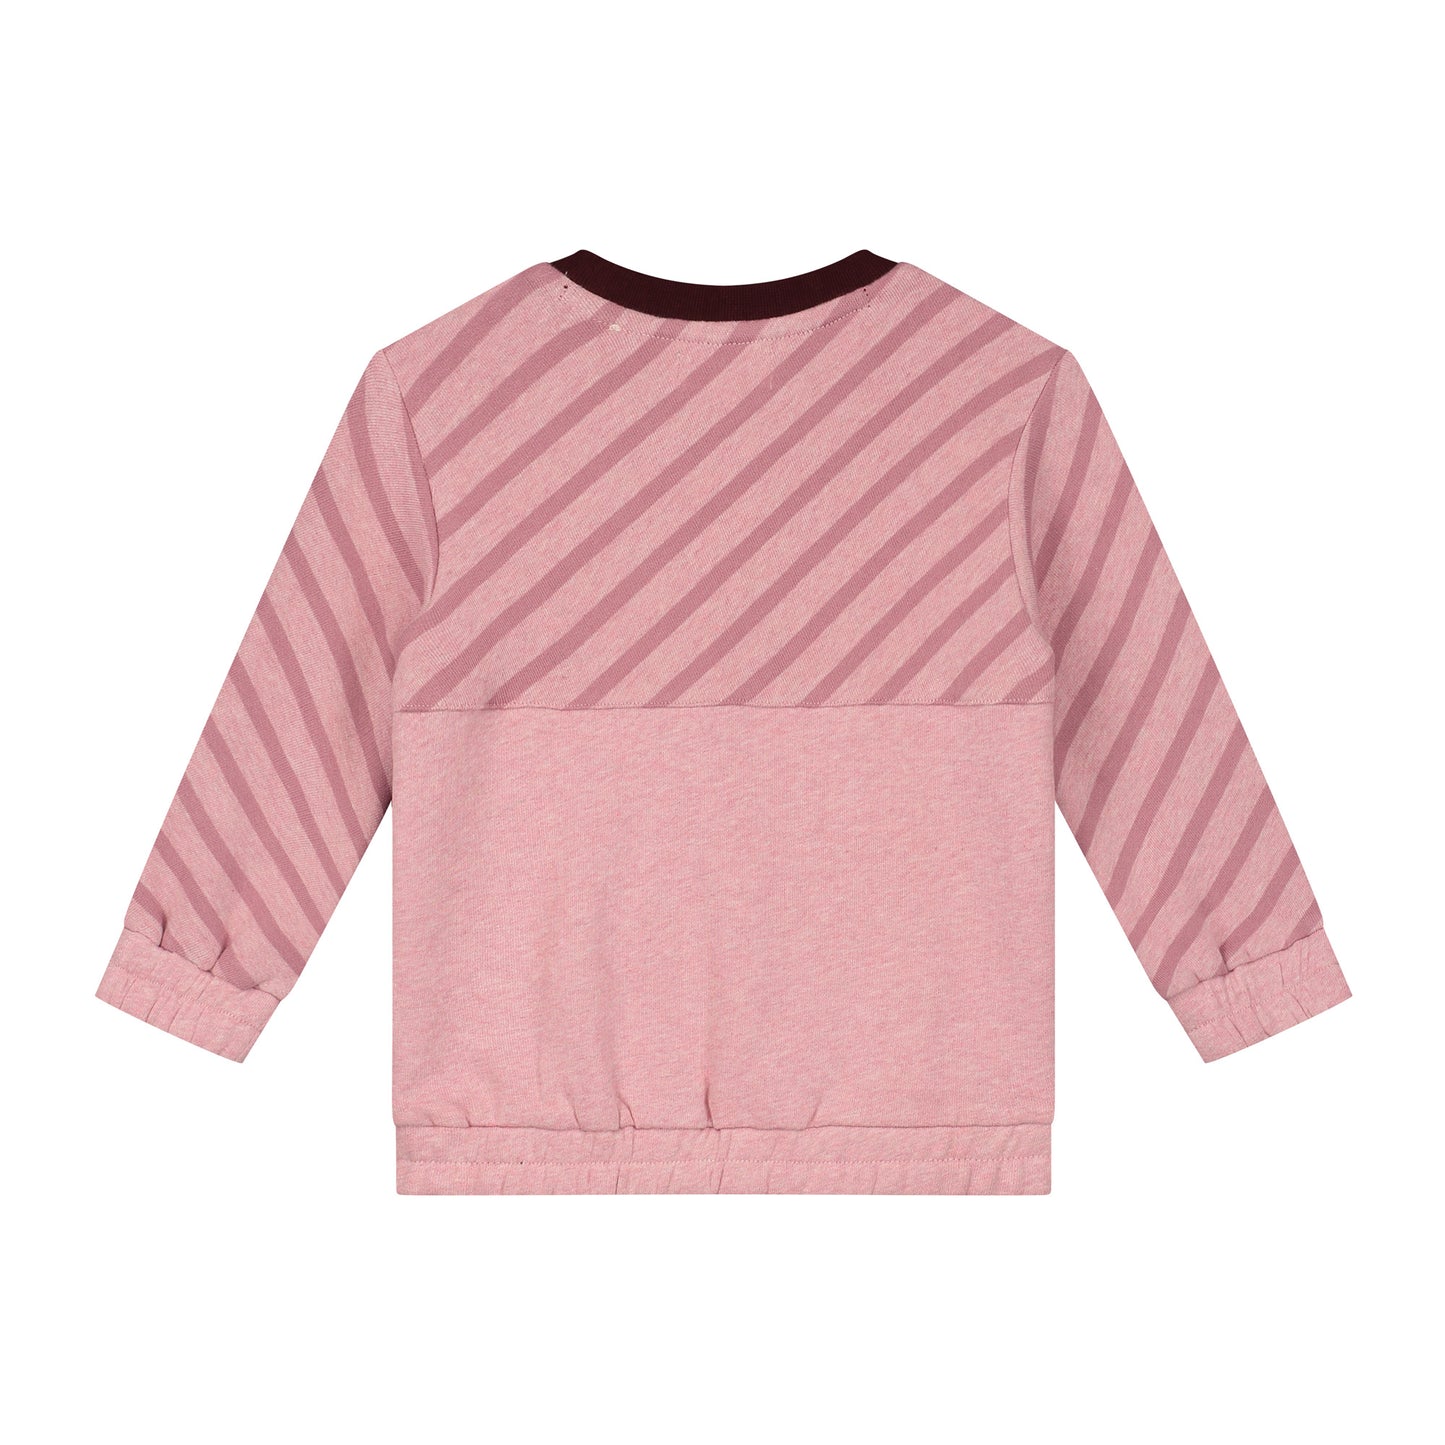 Pink and brown color block sweatshirt